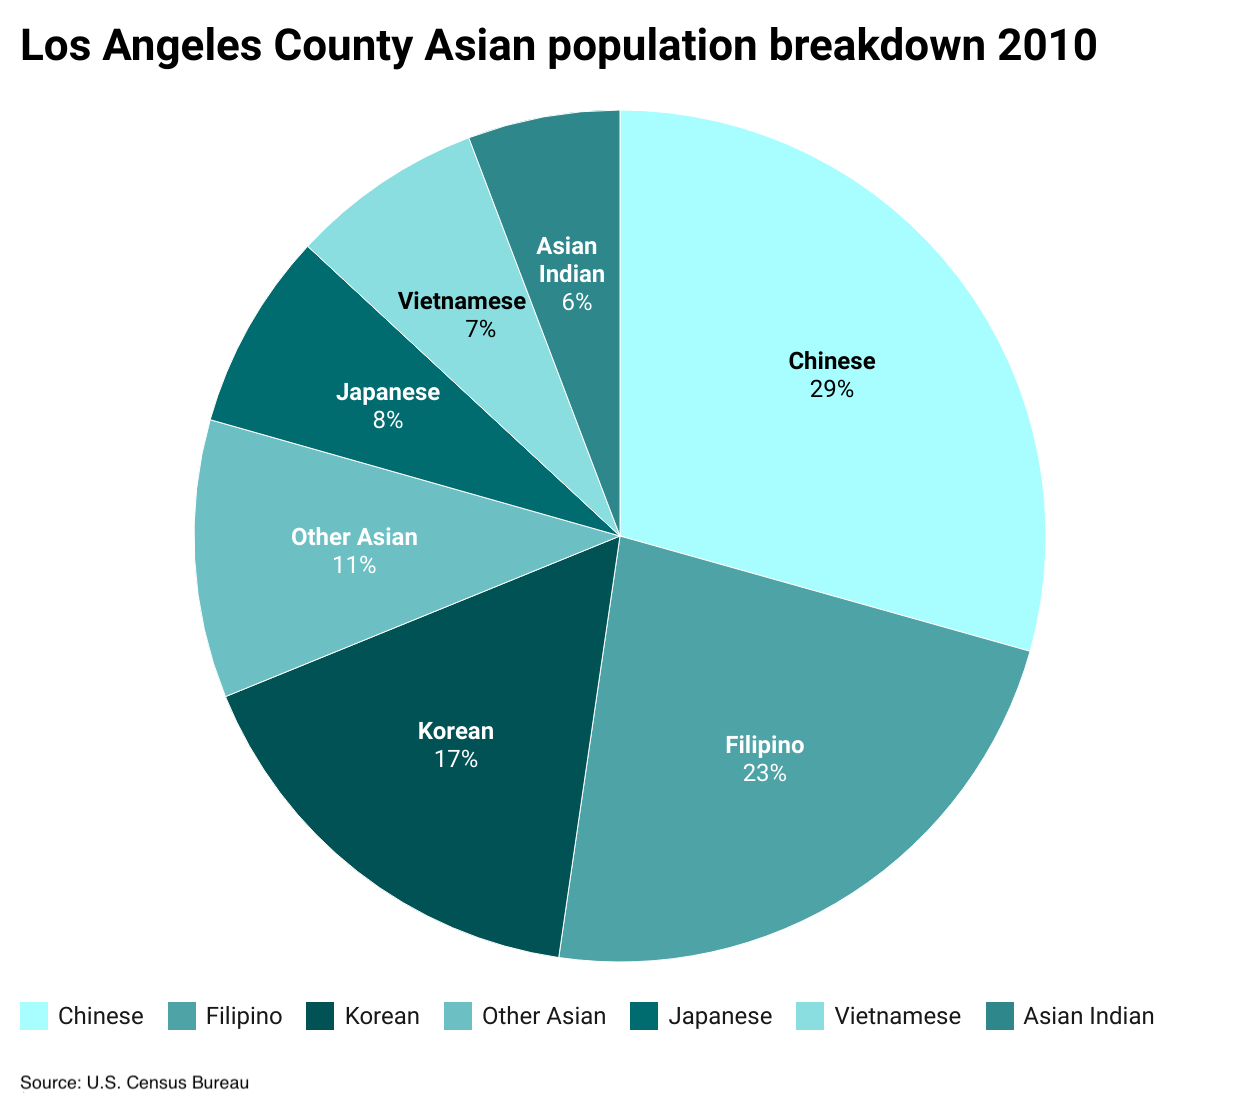 Breakdown of Los Angeles Asian population 2010